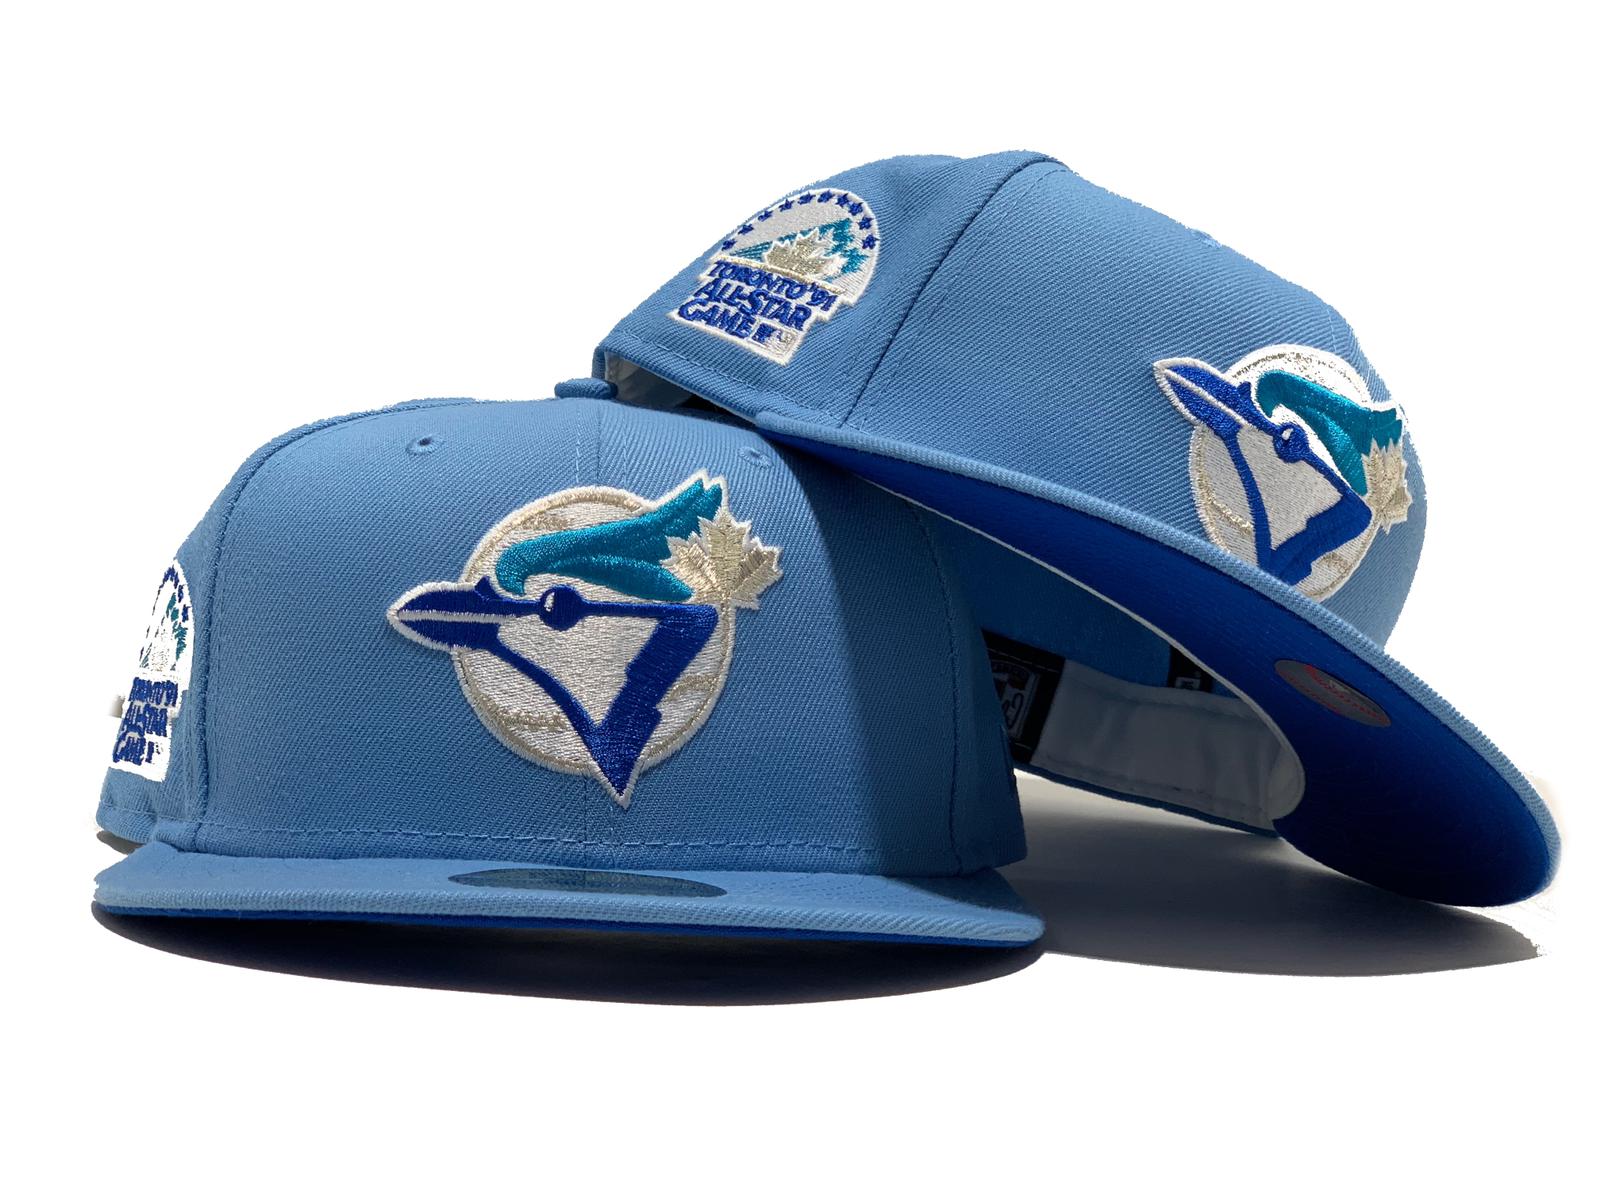 Toronto Blue Jays STOKED SNAPBACK Sky-Royal Hat by New Era